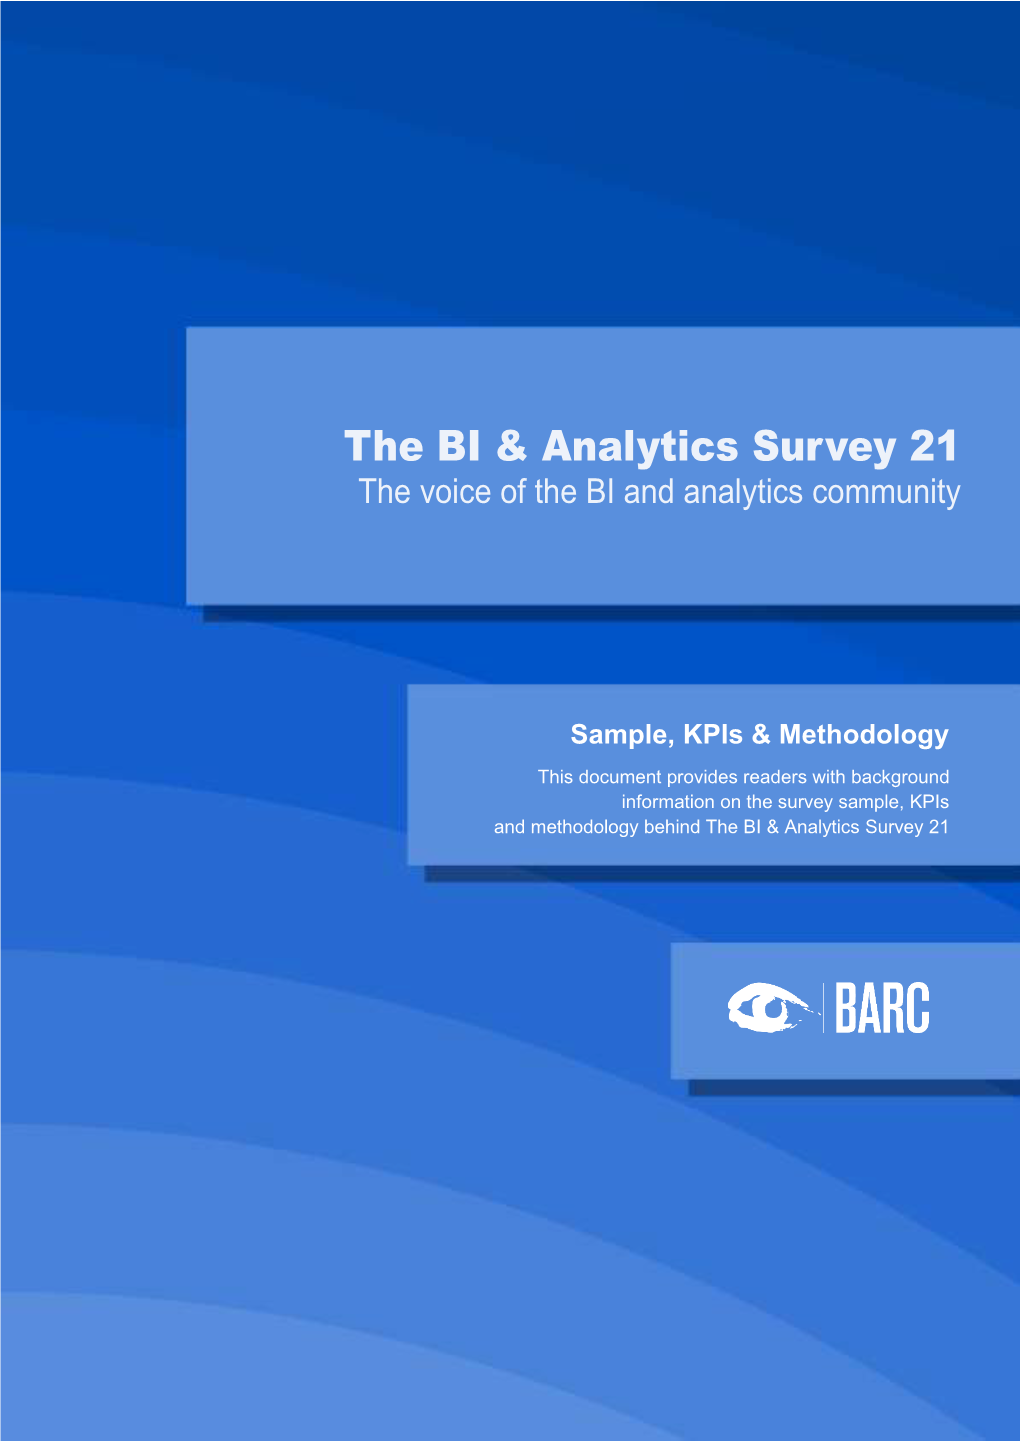 Sample, Kpis and Methodology the BI & Analytics Survey 21